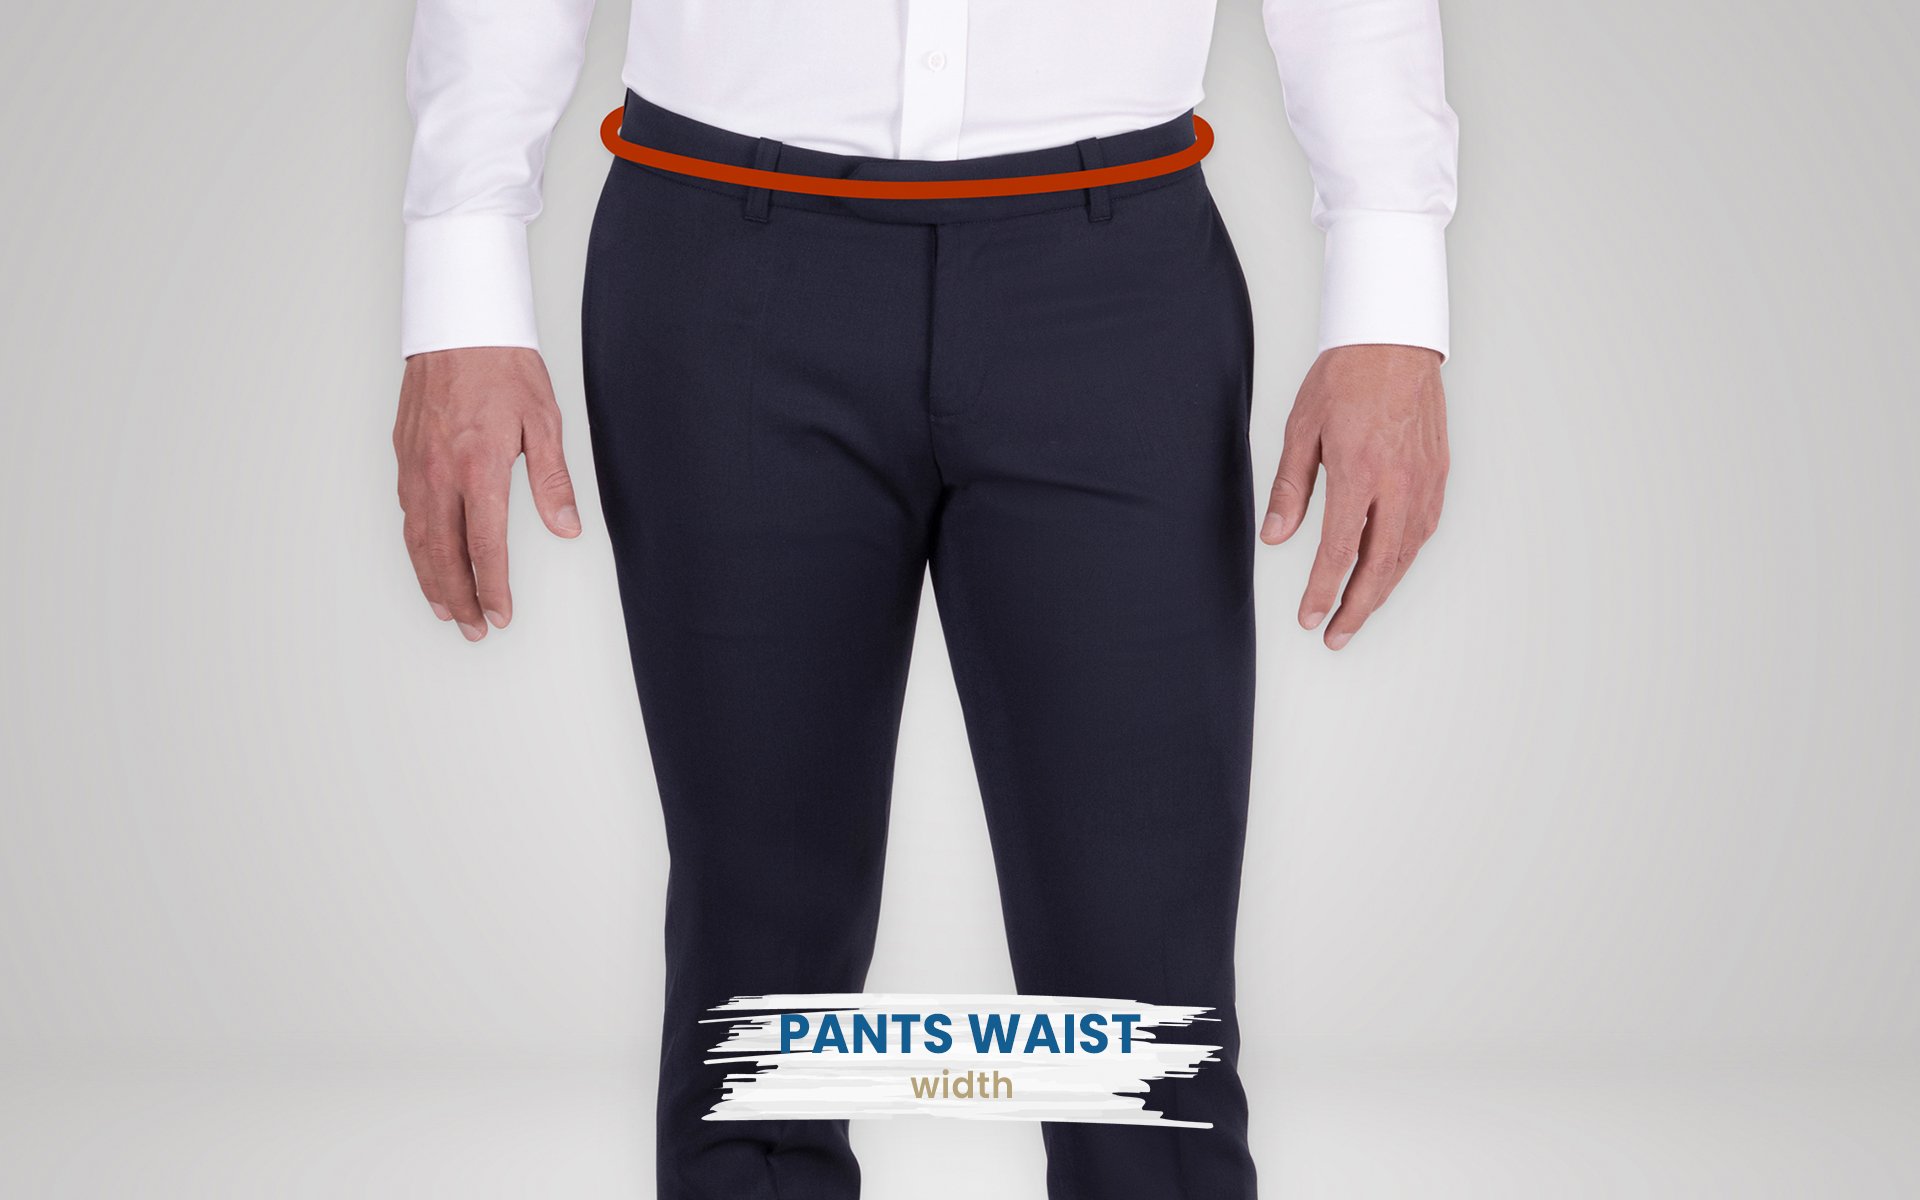 how to measure pants' waist